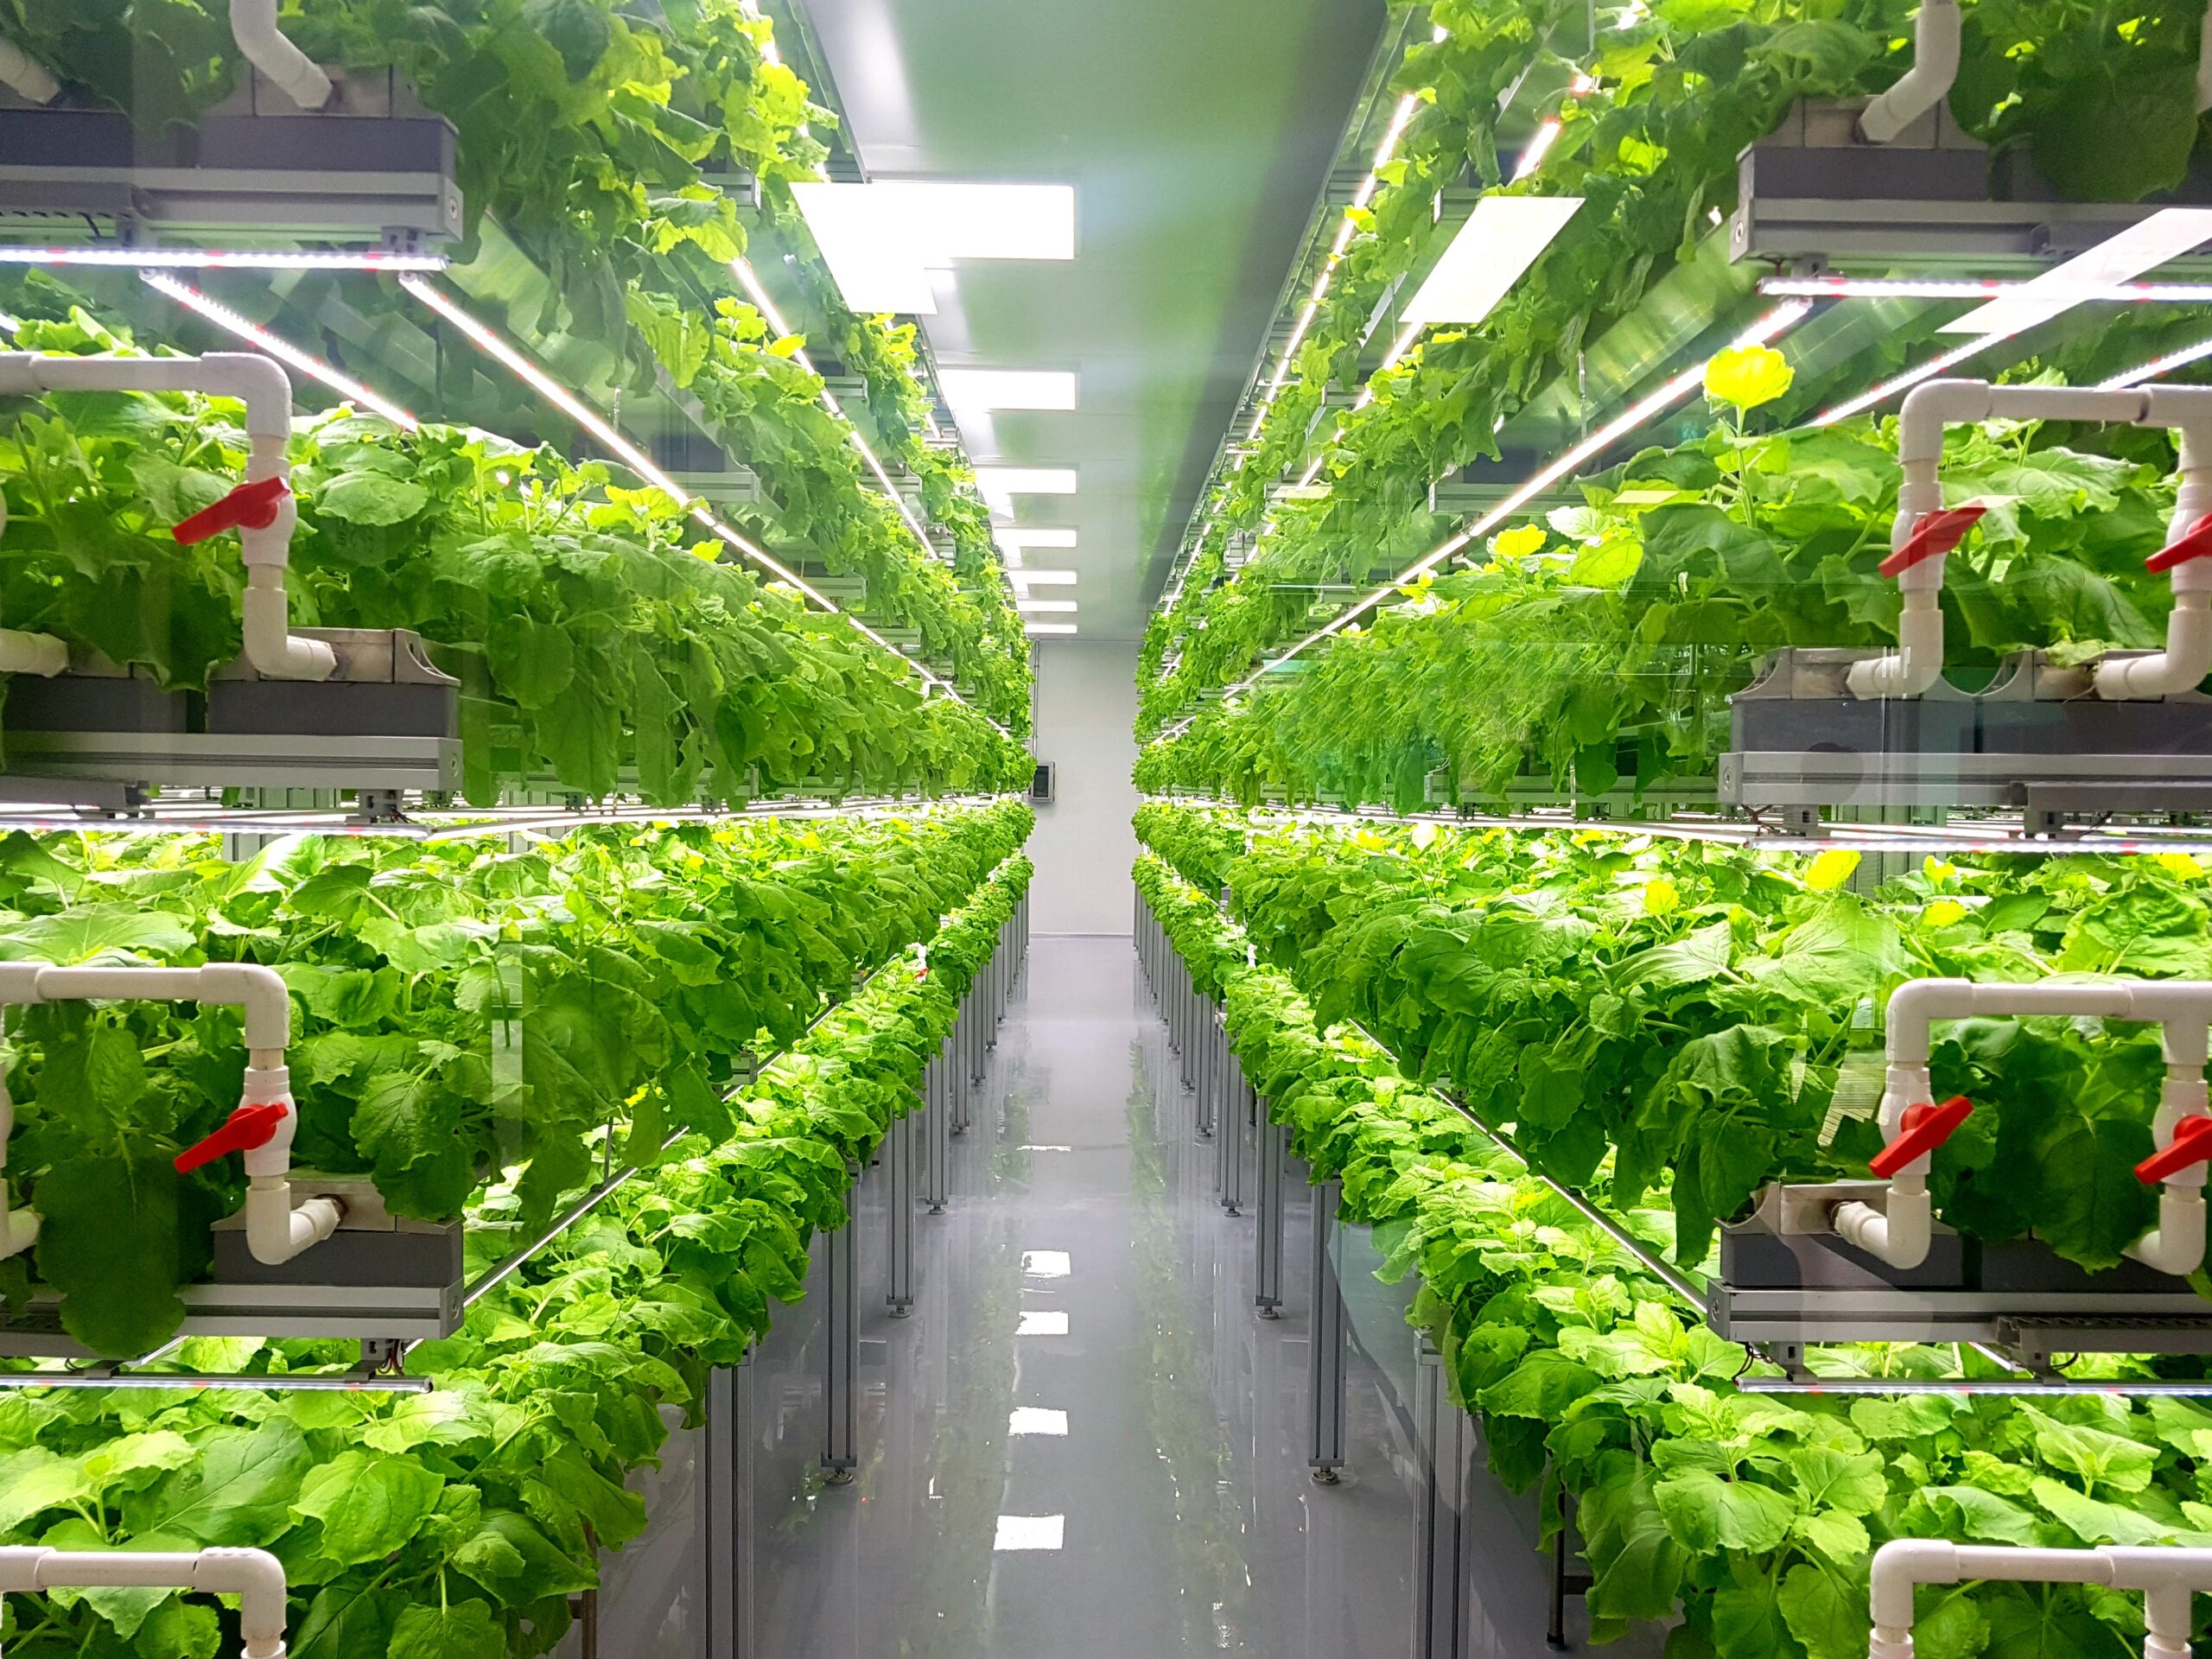 Sustainable indoor farming